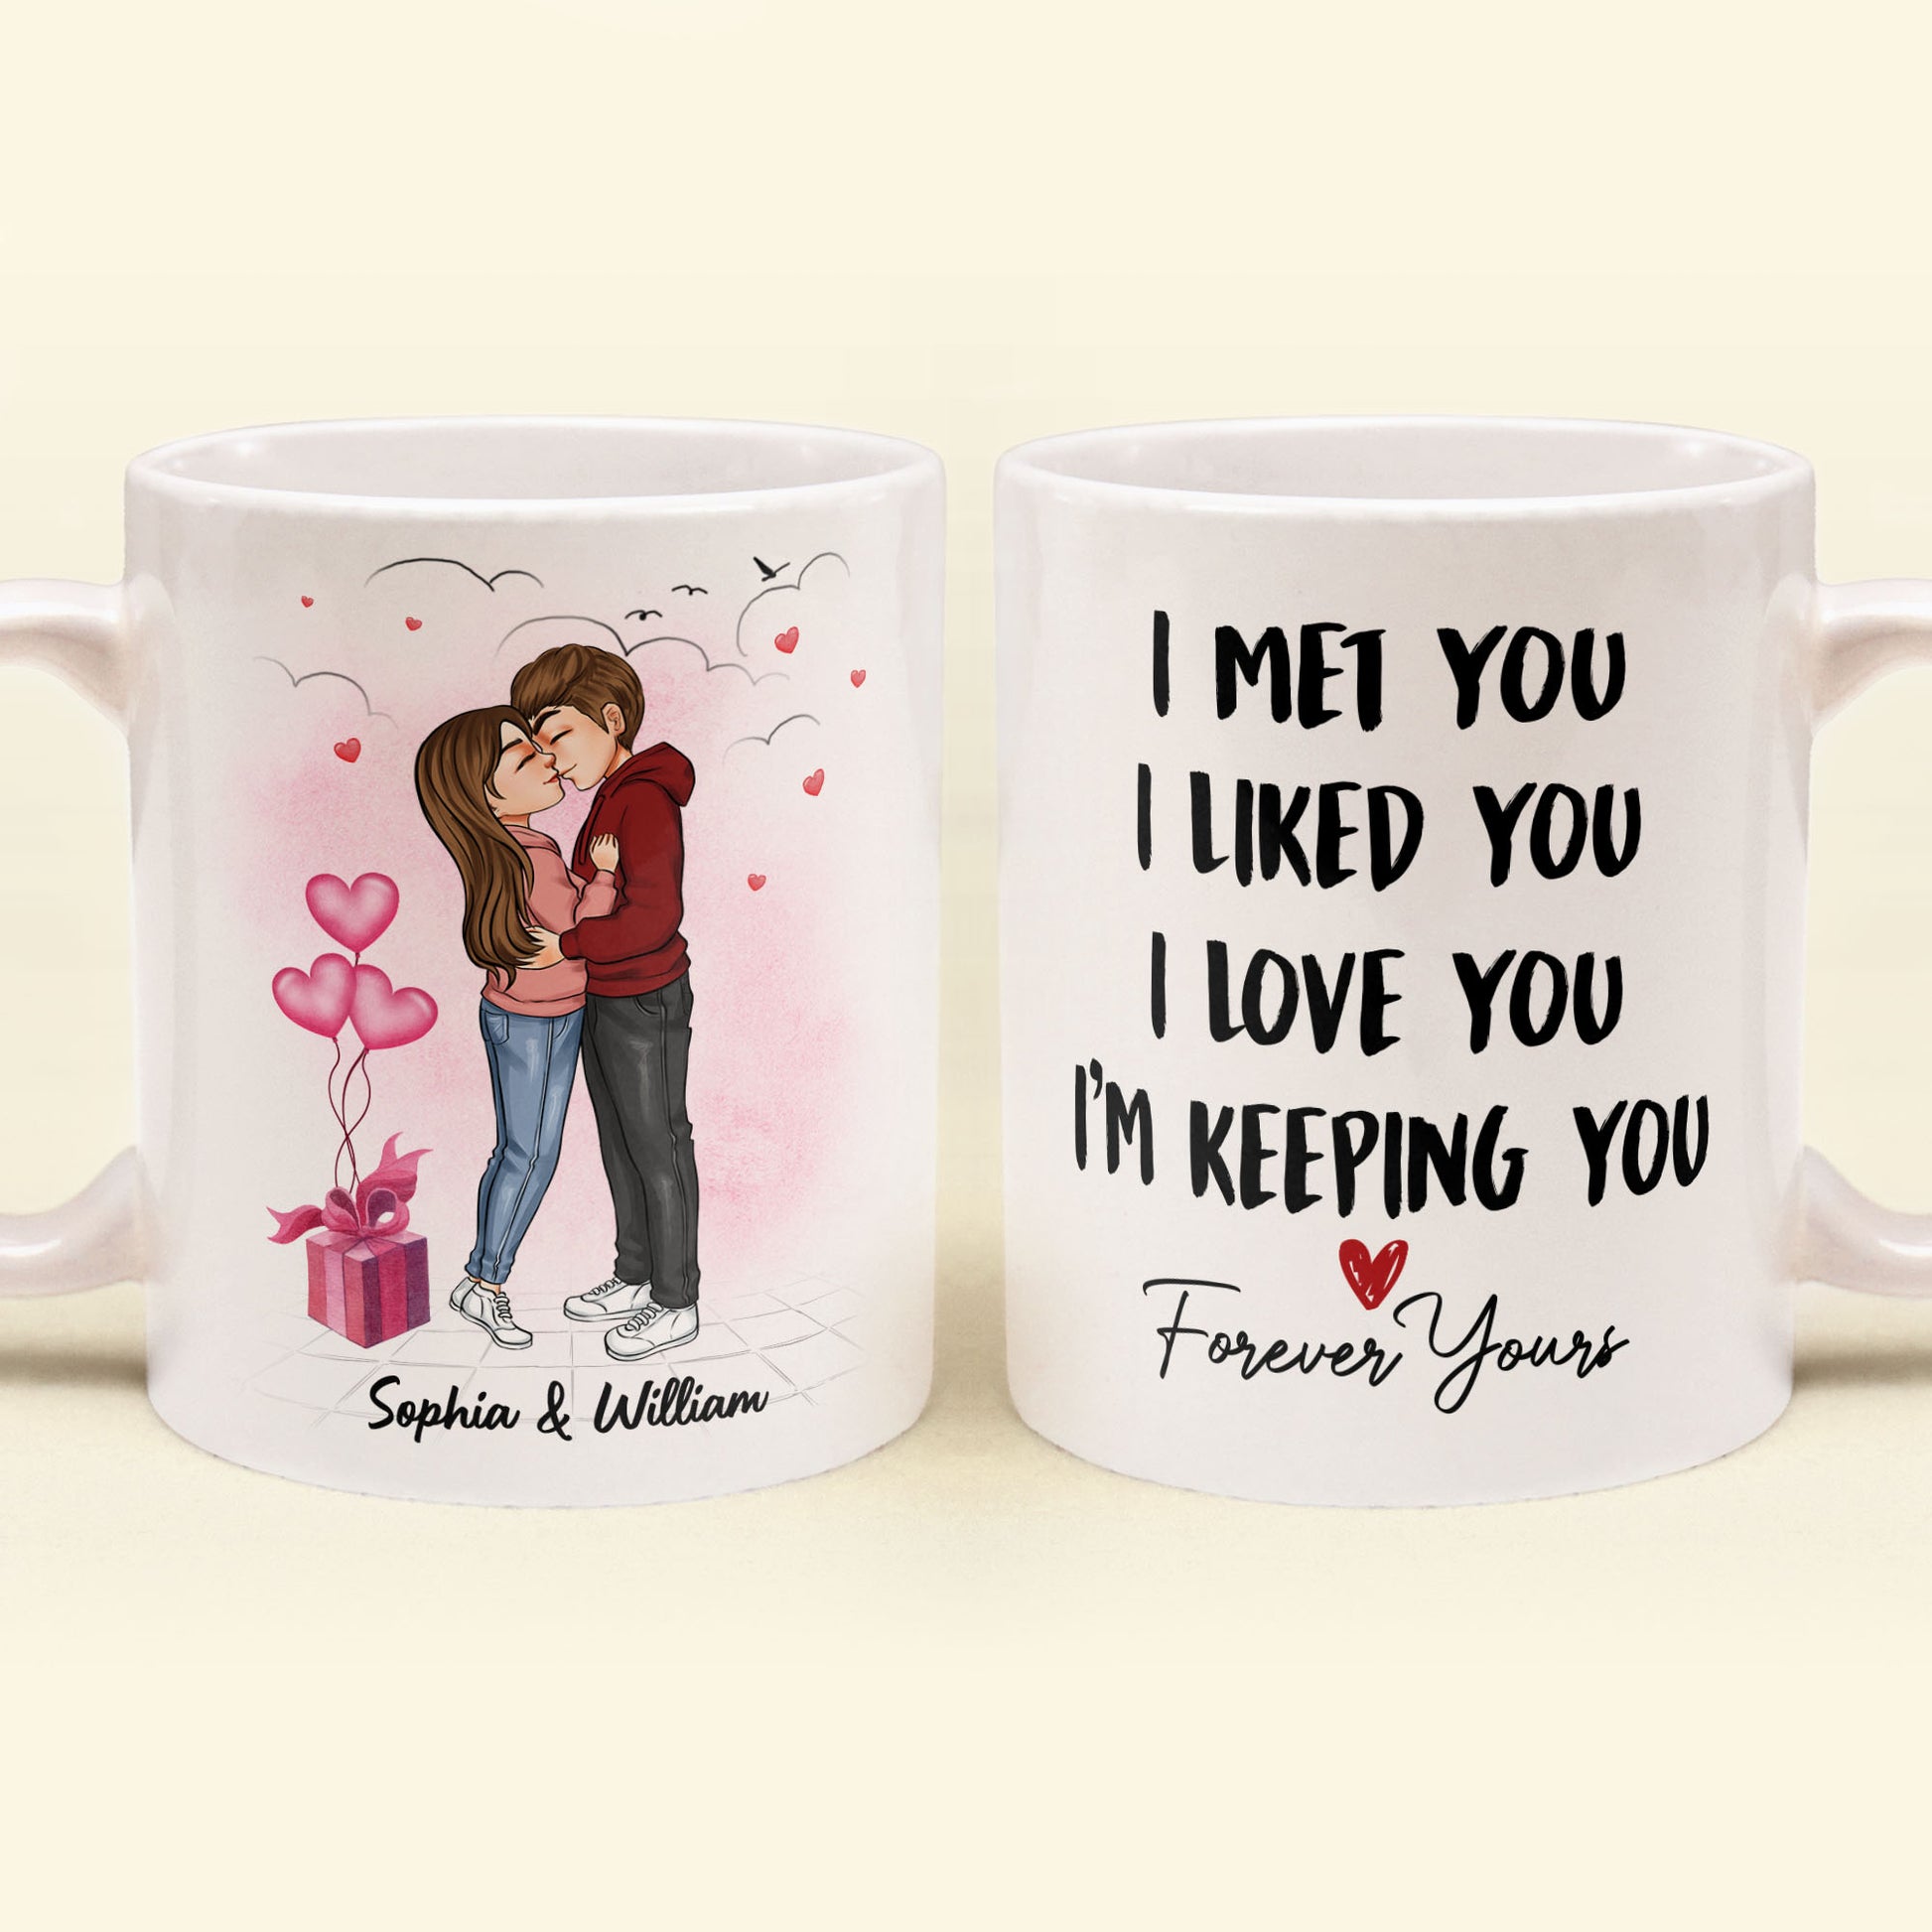 LOVE GIFT Romantic Gift for Wife, Husband, Girlfriend, Boyfriend, Love,  Printed Coffee Mug, Birthday Gift, Anniversary